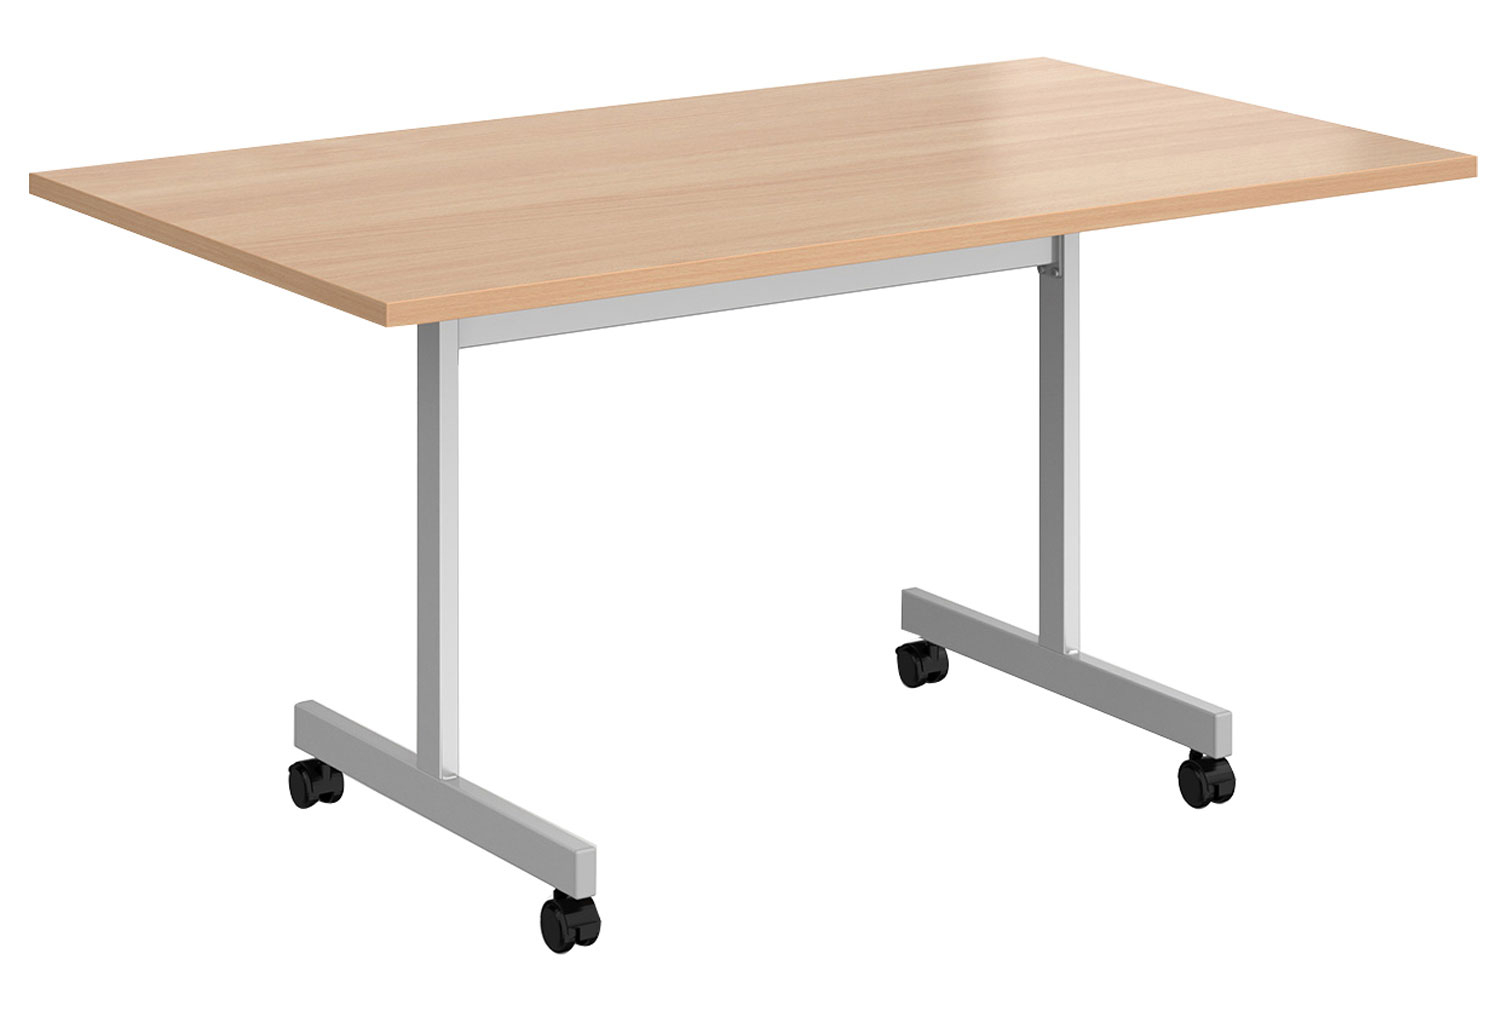 Foxham Rectangular Flip Top Meeting Tables, 140wx80dx73h (cm), Beech, Express Delivery